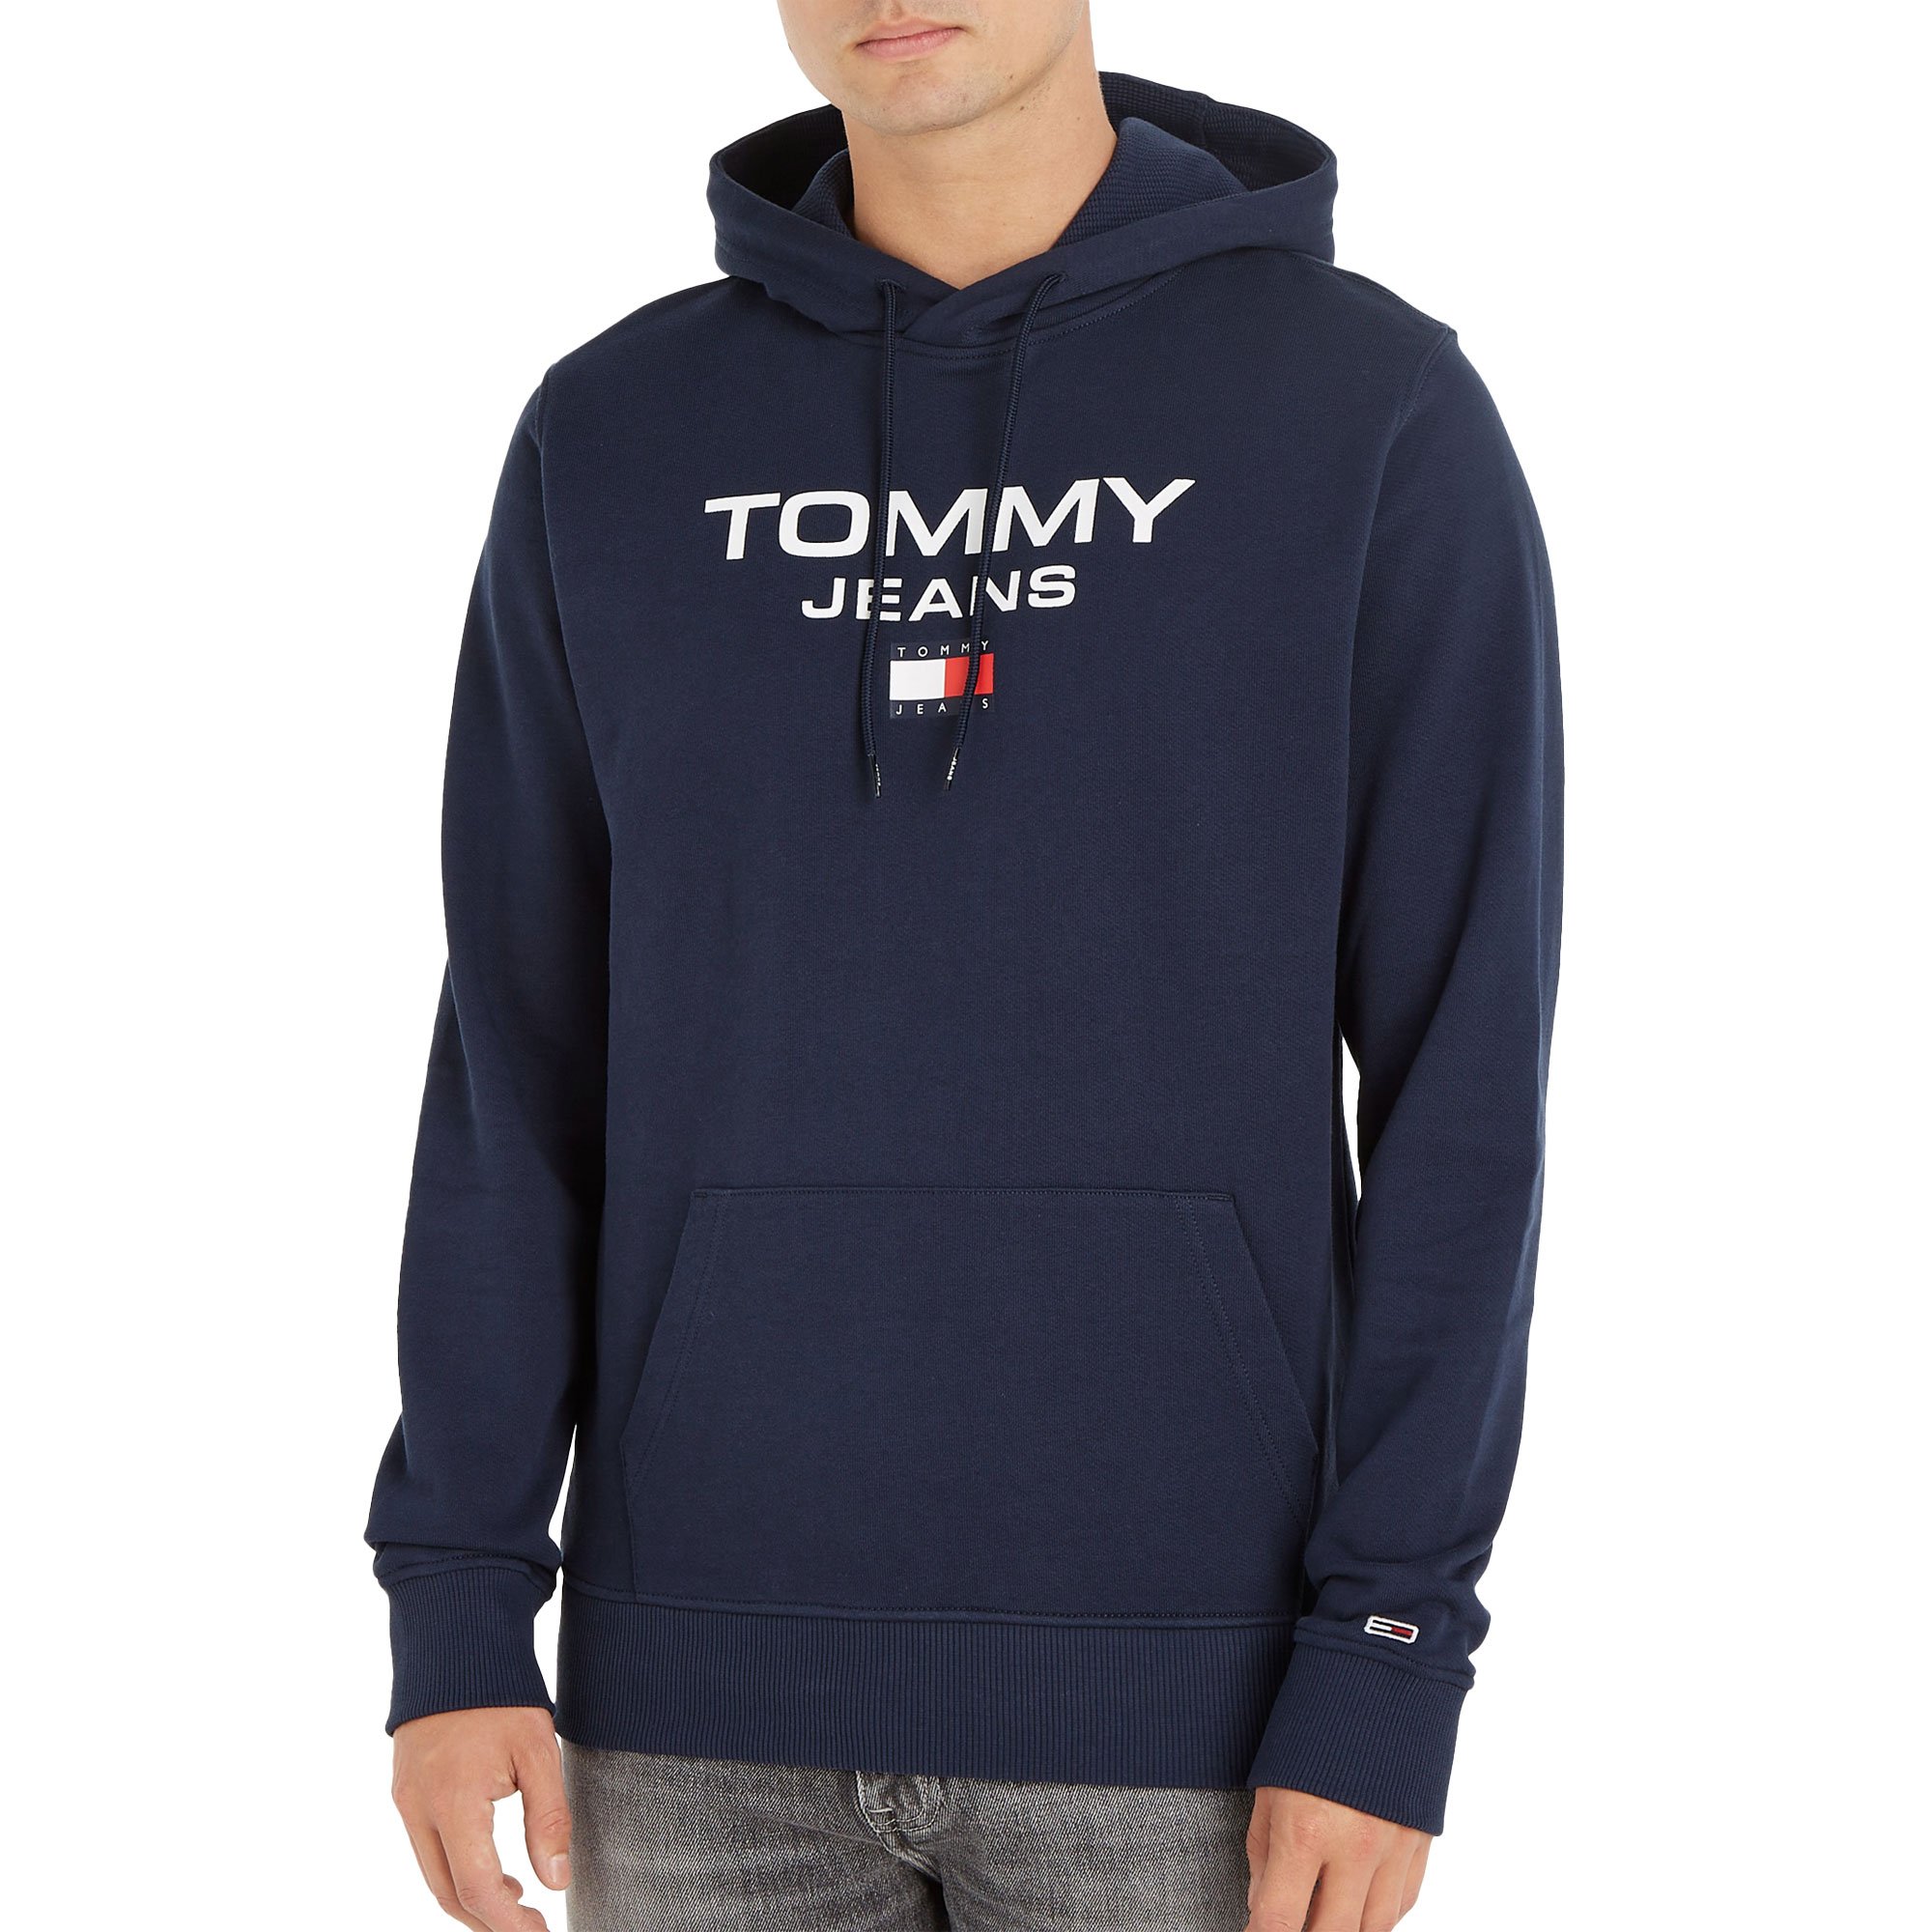 twilight REG TJM HOODIE navy Jeans Herren XL Kapuzensweatshirt Tommy dunkelblau ENTRY